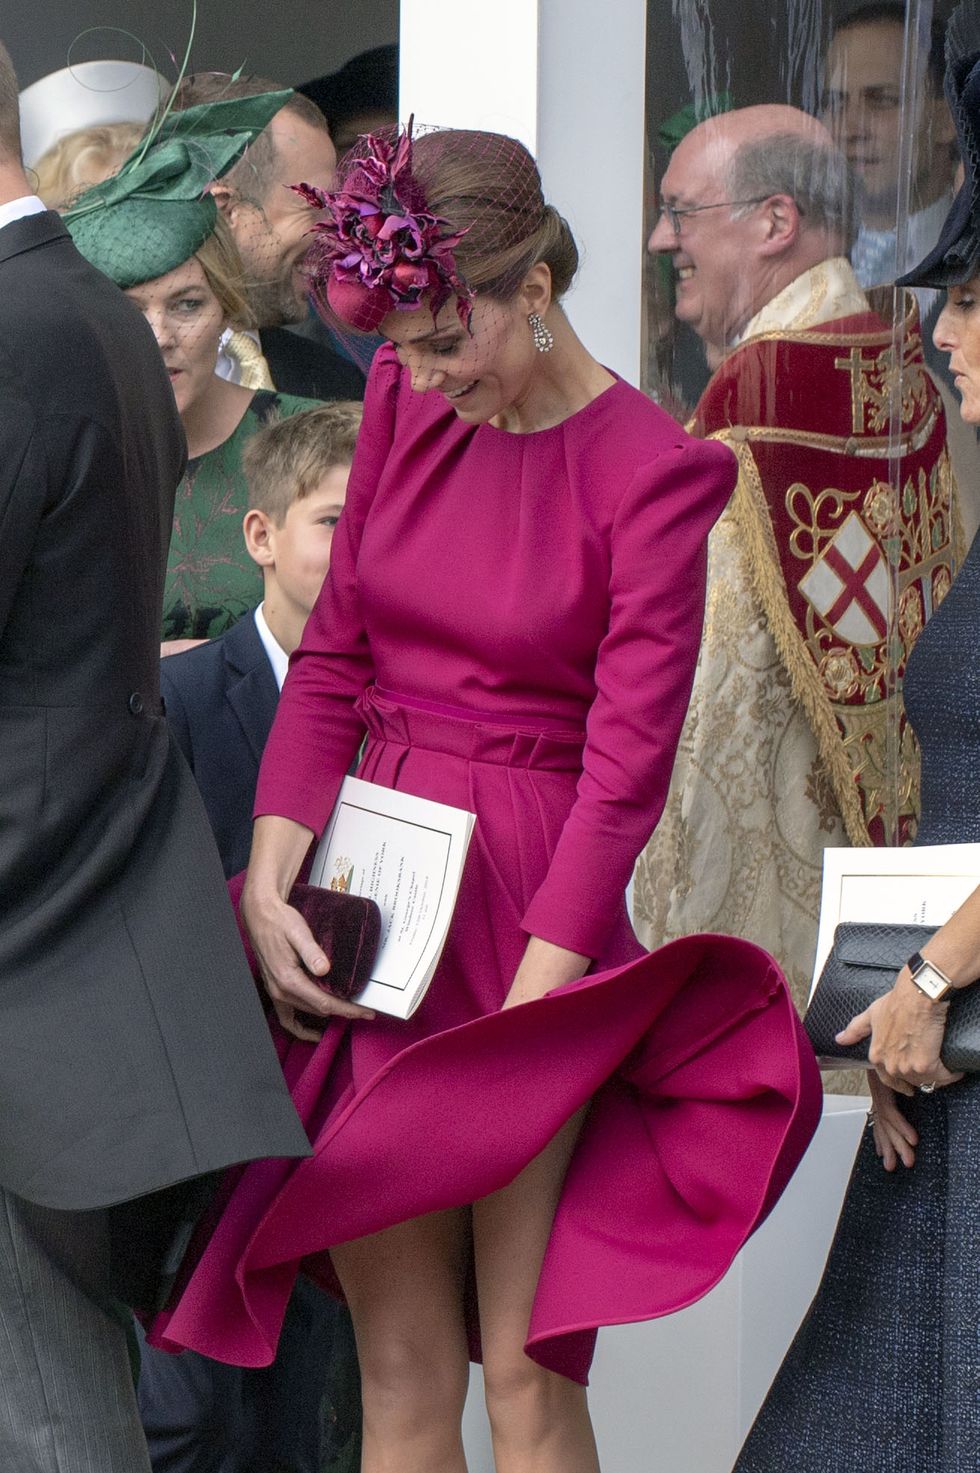 Genius Royal Family Fashion Hacks and Style Tricks